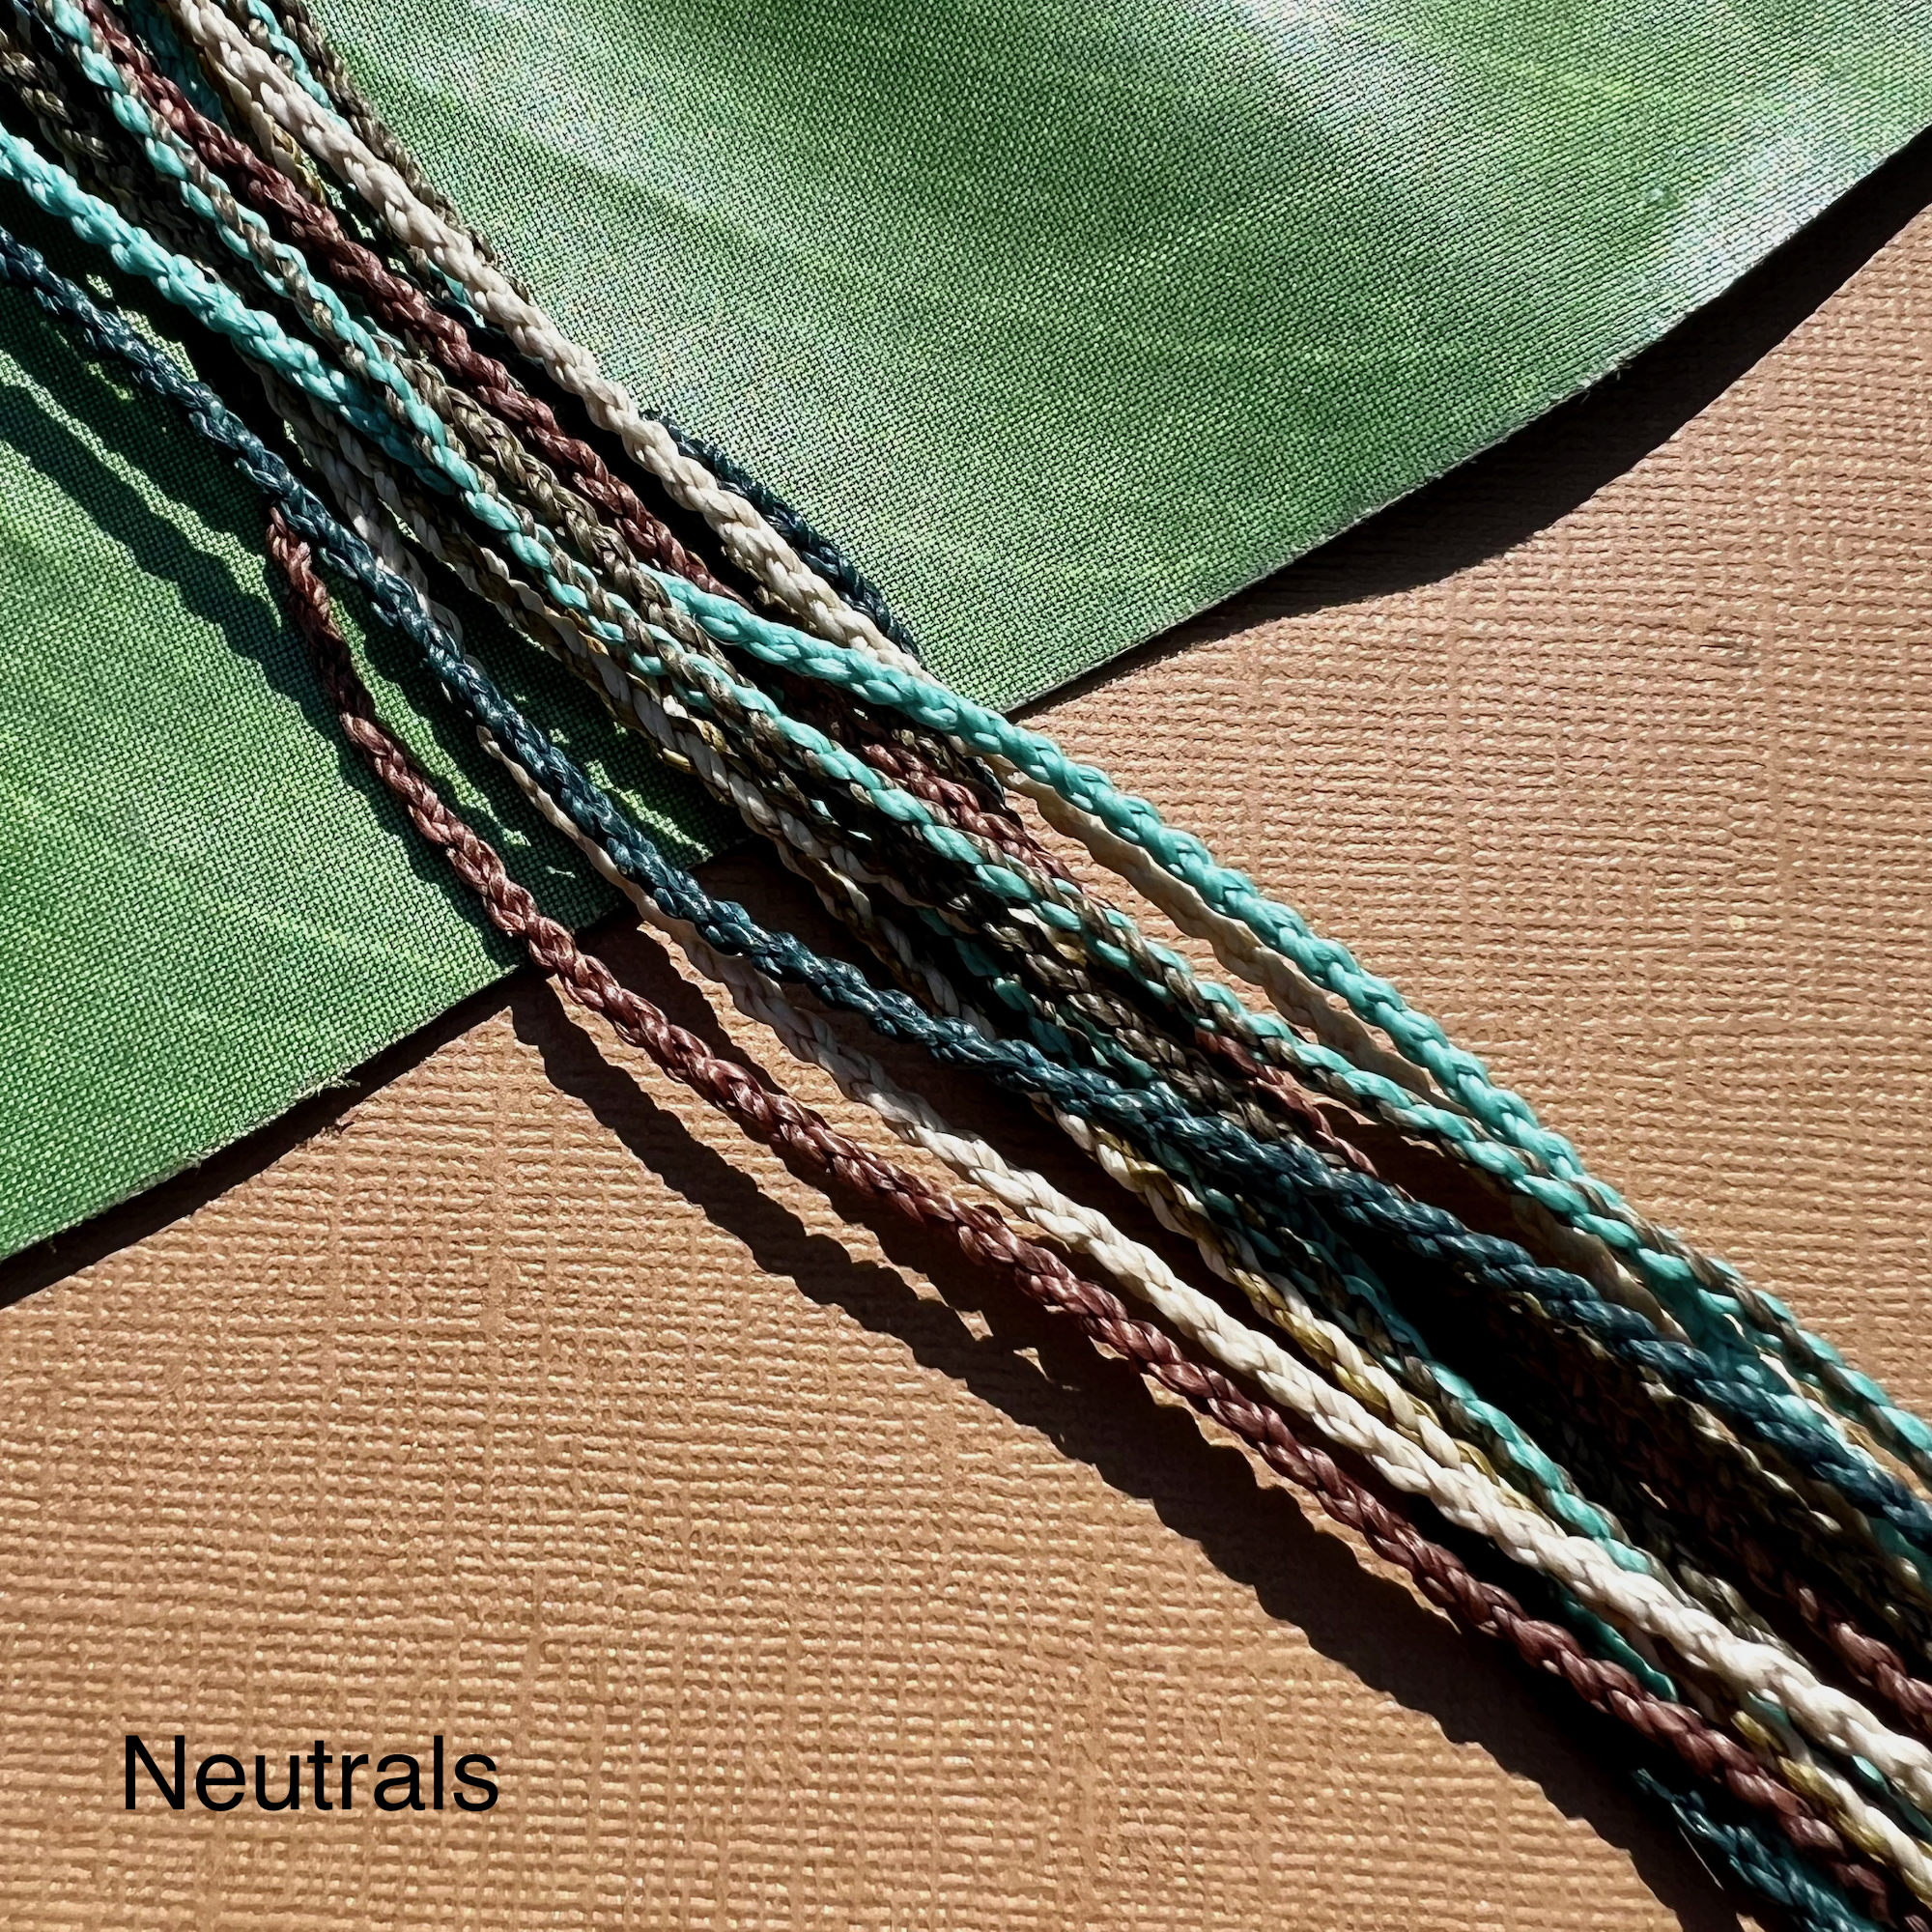 Multi Strand Braided Cord Necklace - Neutrals